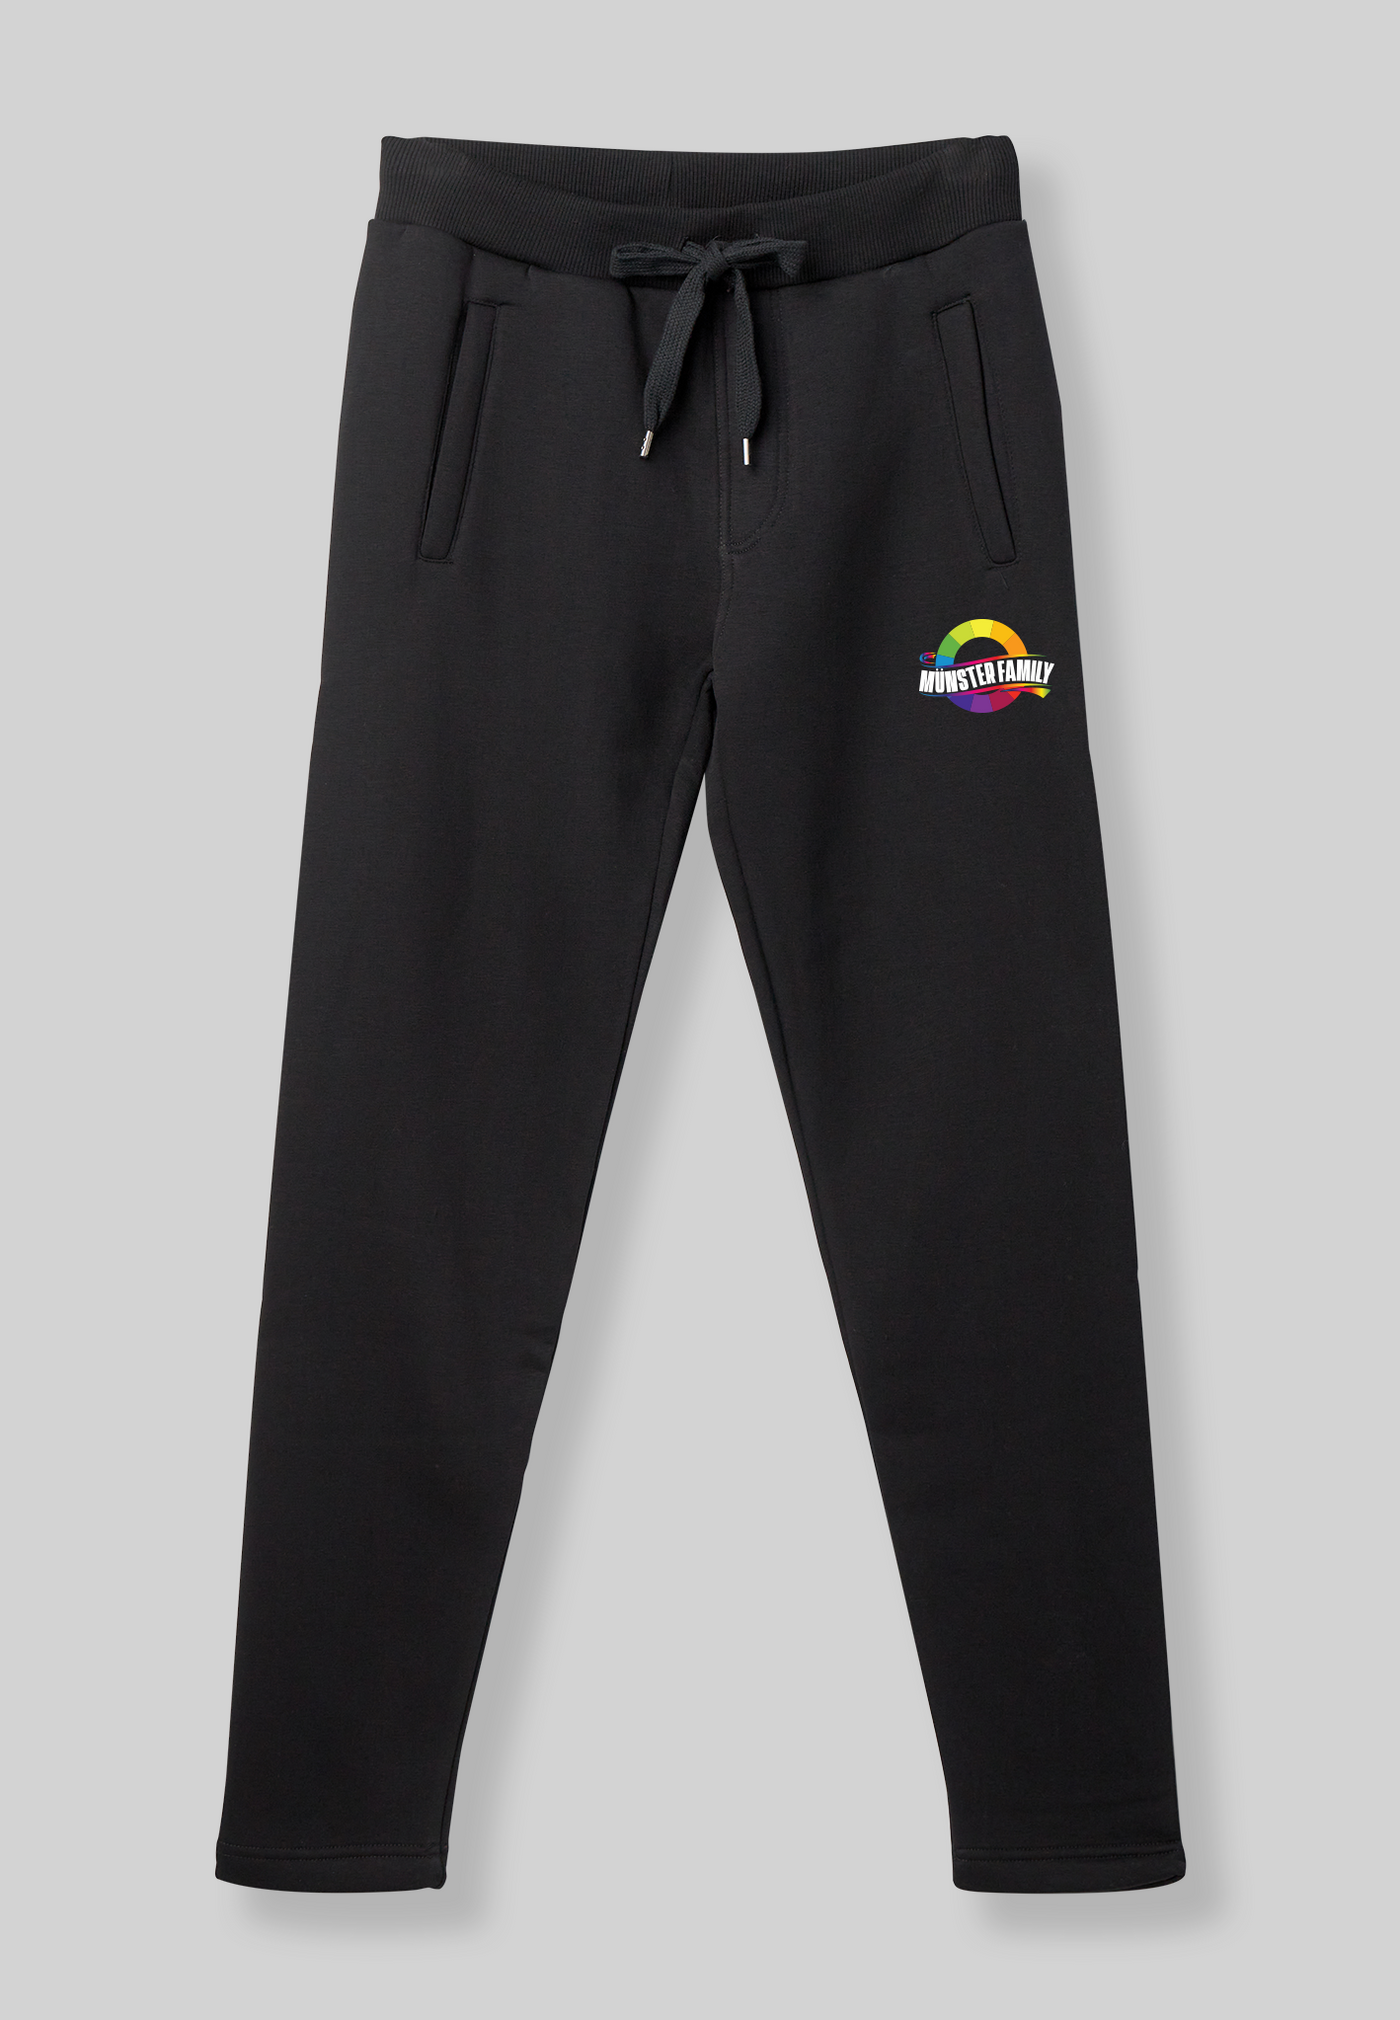 Familien Münster - Small logo - Black sweatpants